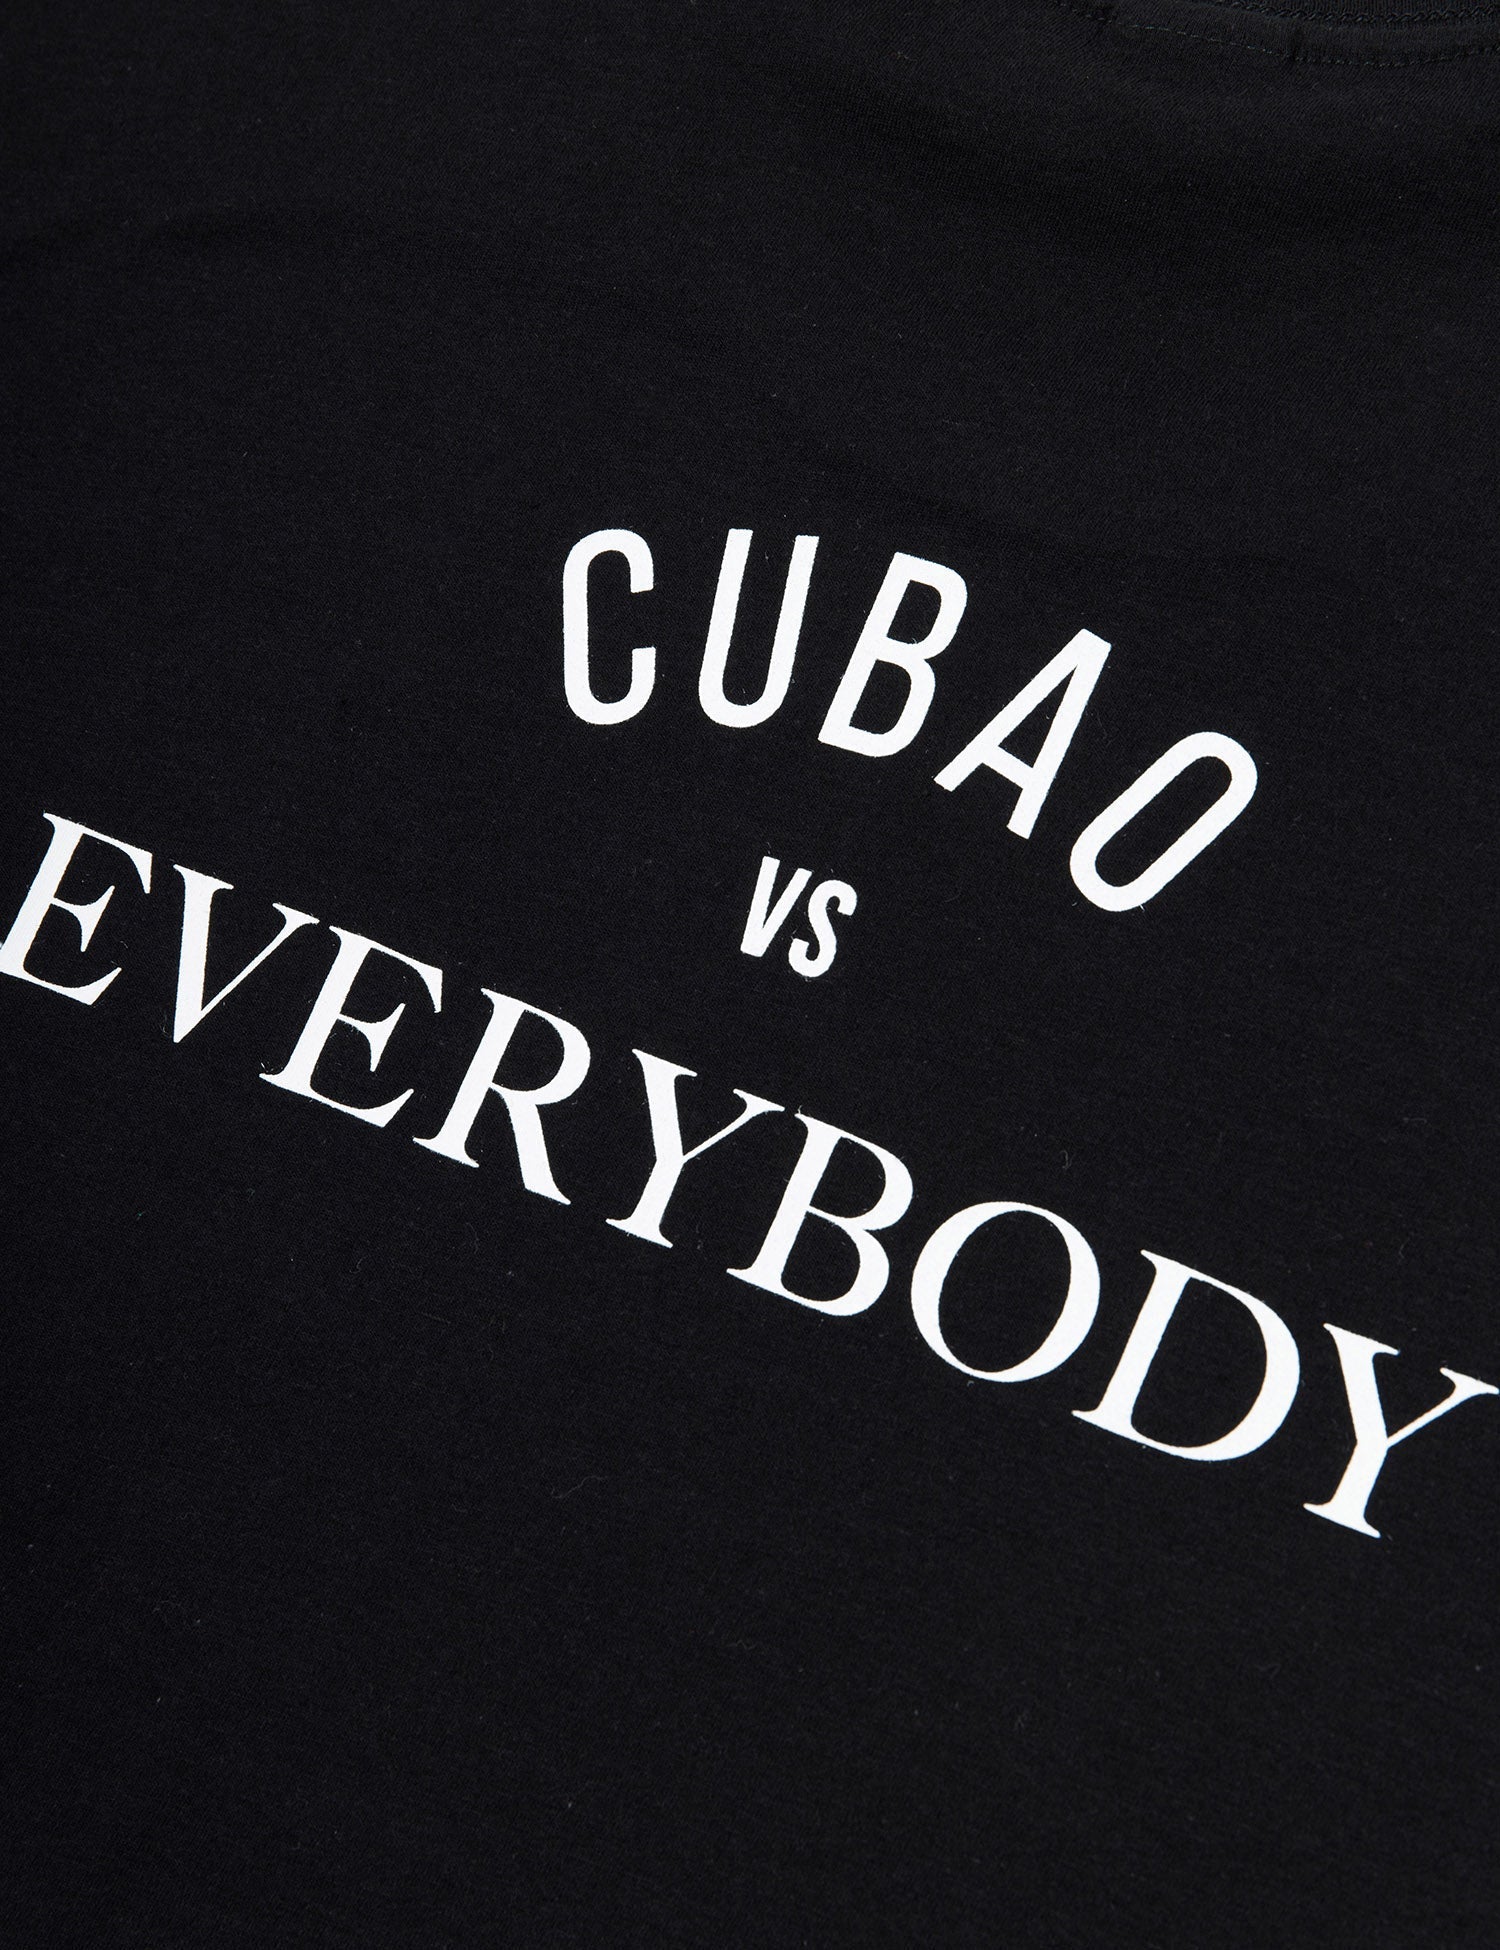 Cubao VS Everybody (Black)